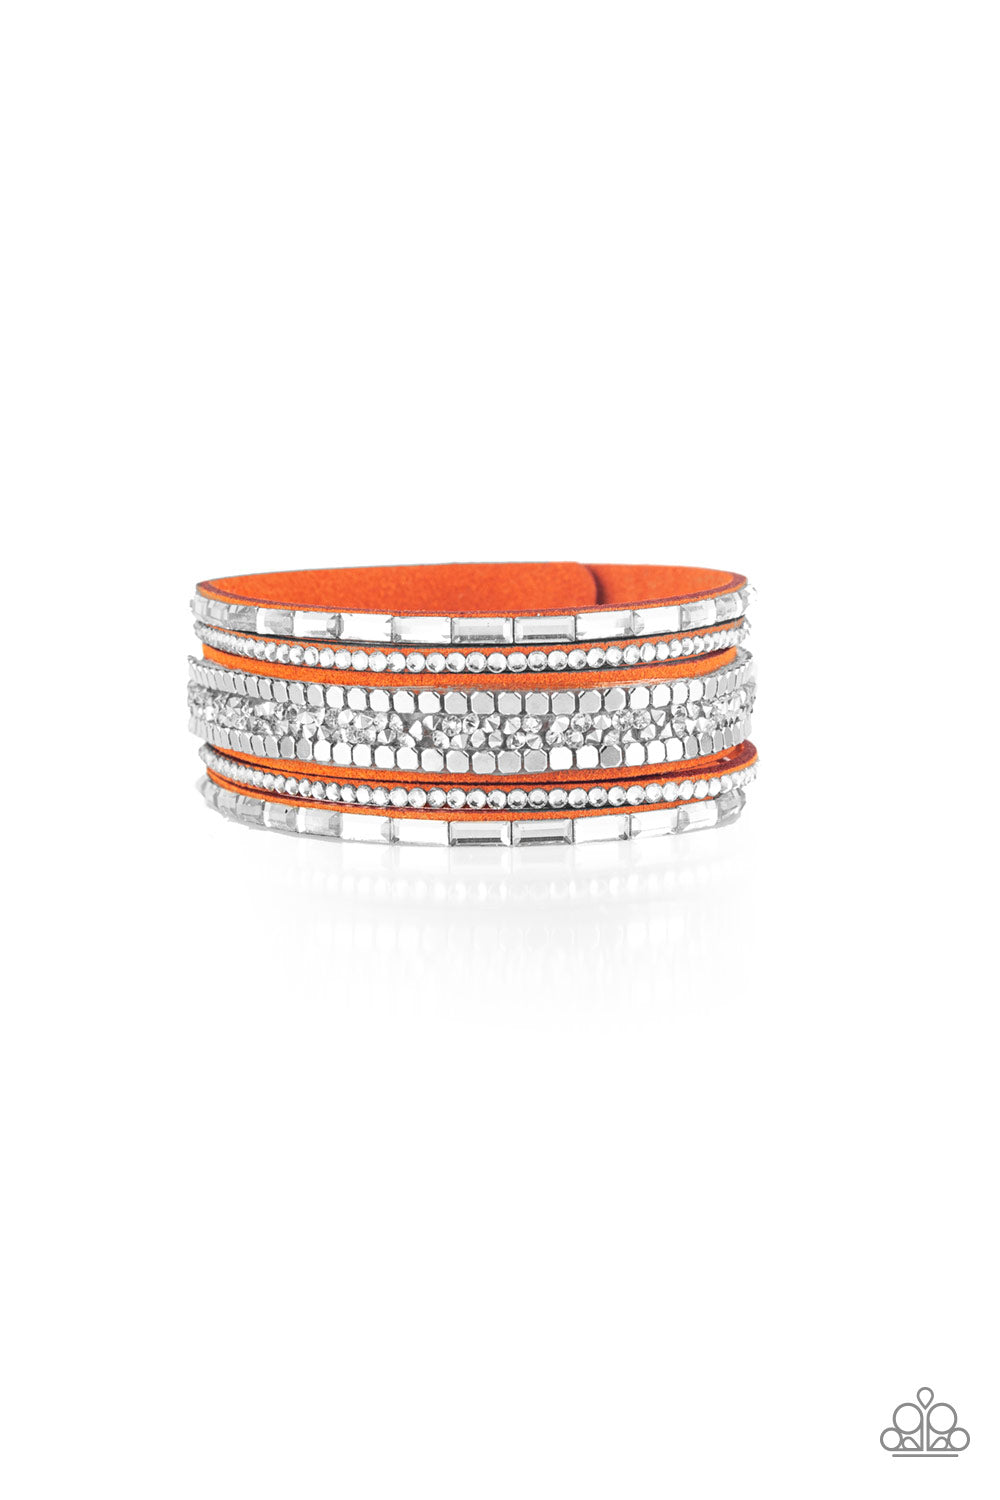 PRE-ORDER - Paparazzi Rebel In Rhinestones - Orange - Bracelet - $5 Jewelry with Ashley Swint